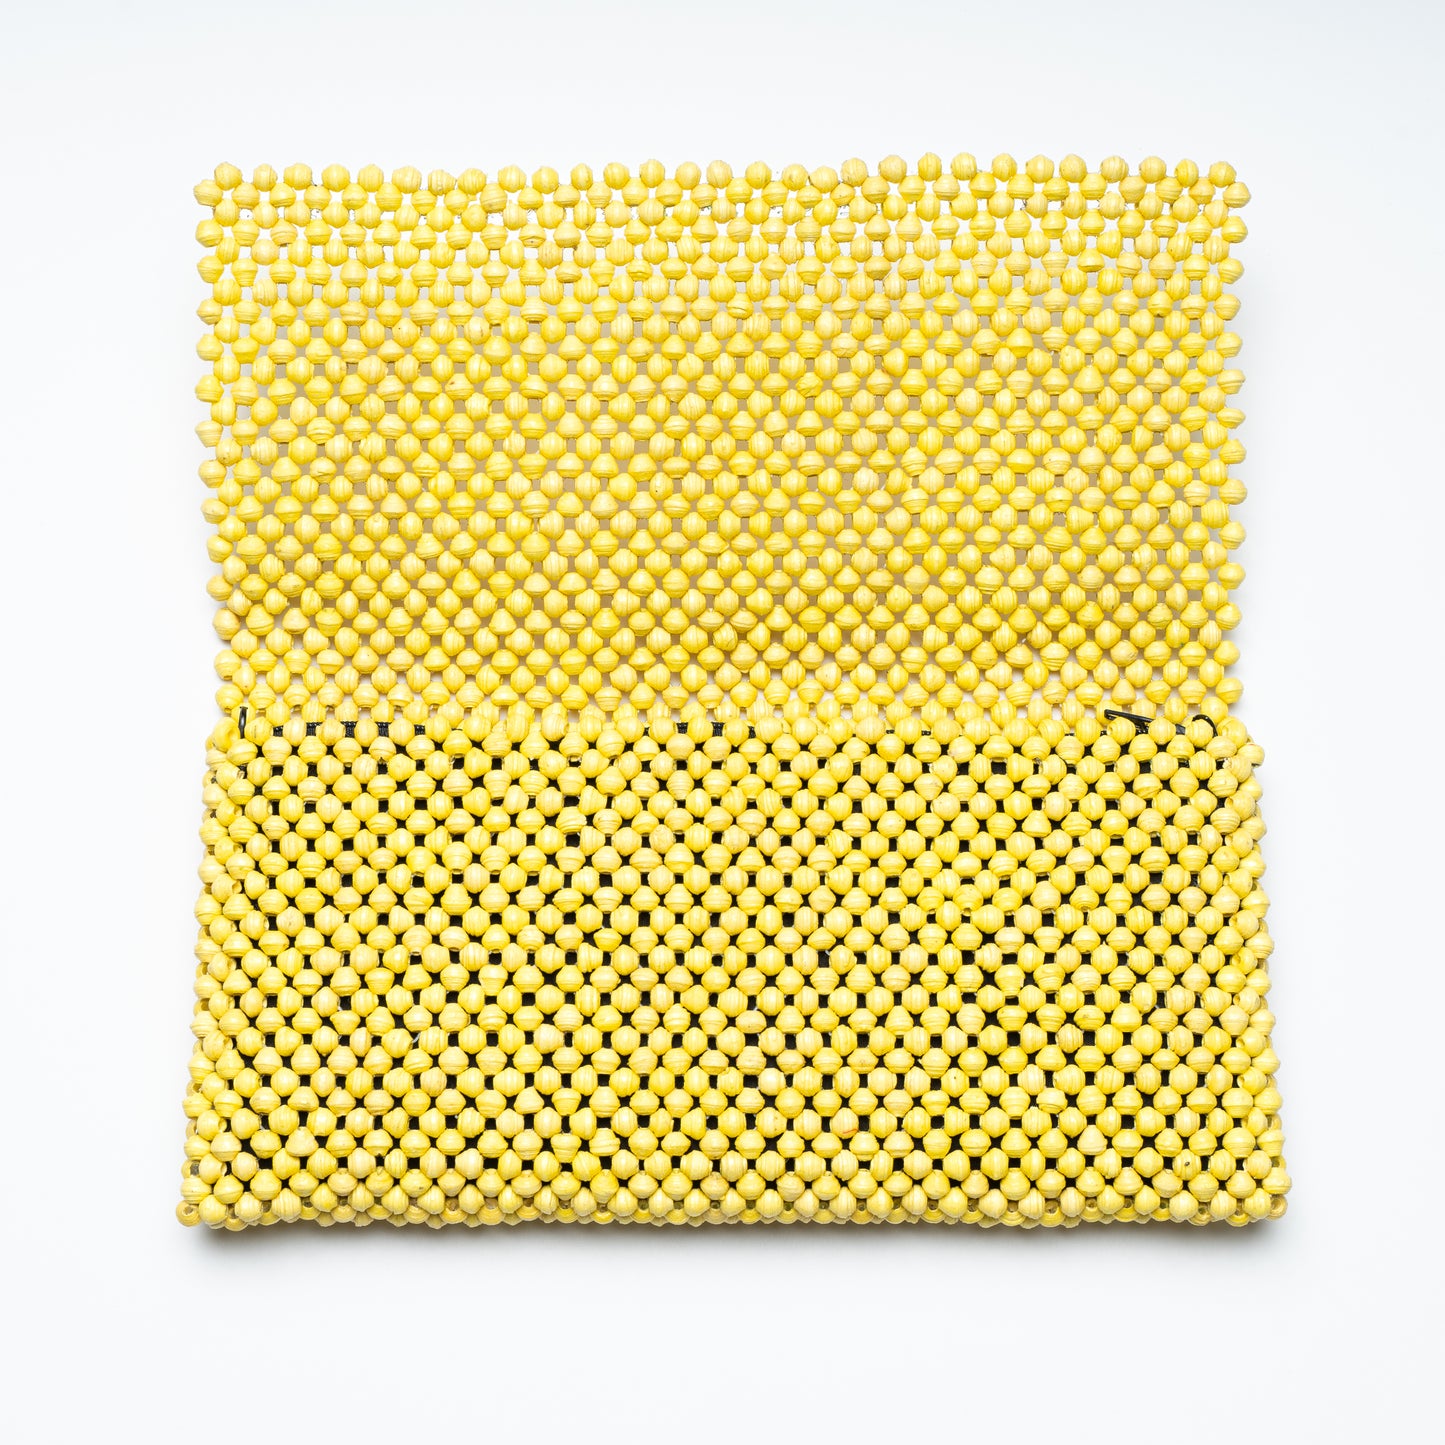 Paper bead clutch - Yellow